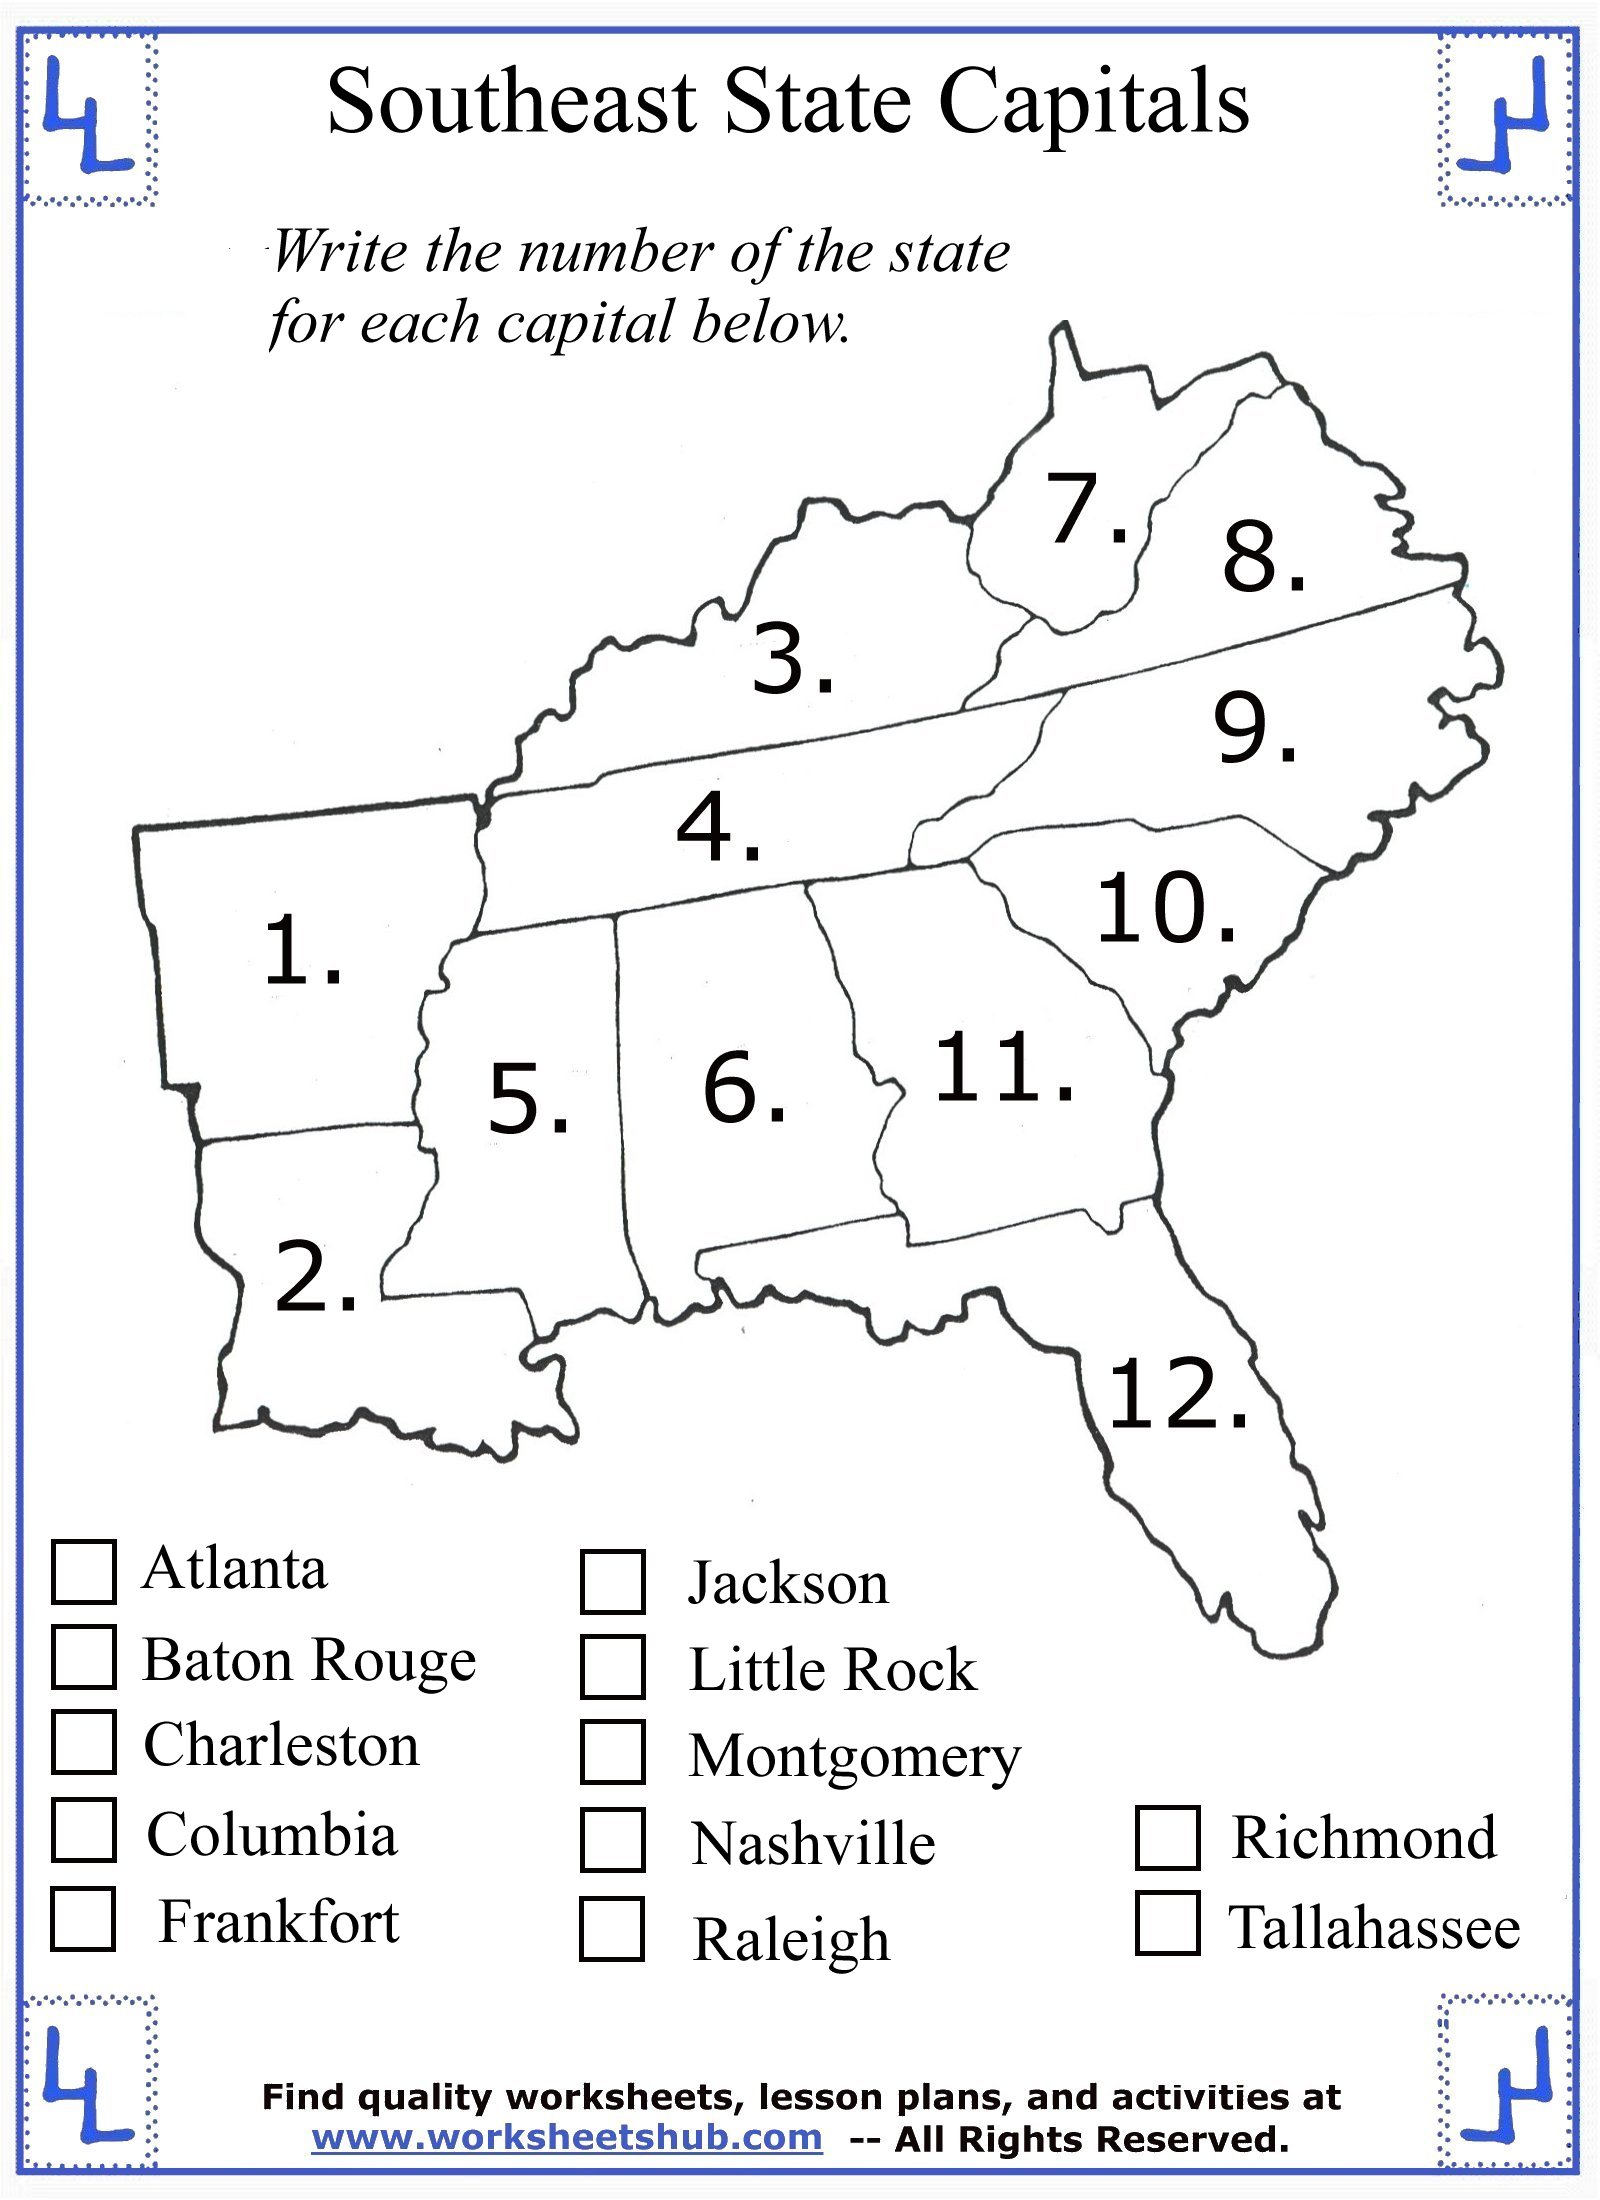 4th-grade-social-studies-southeast-region-states